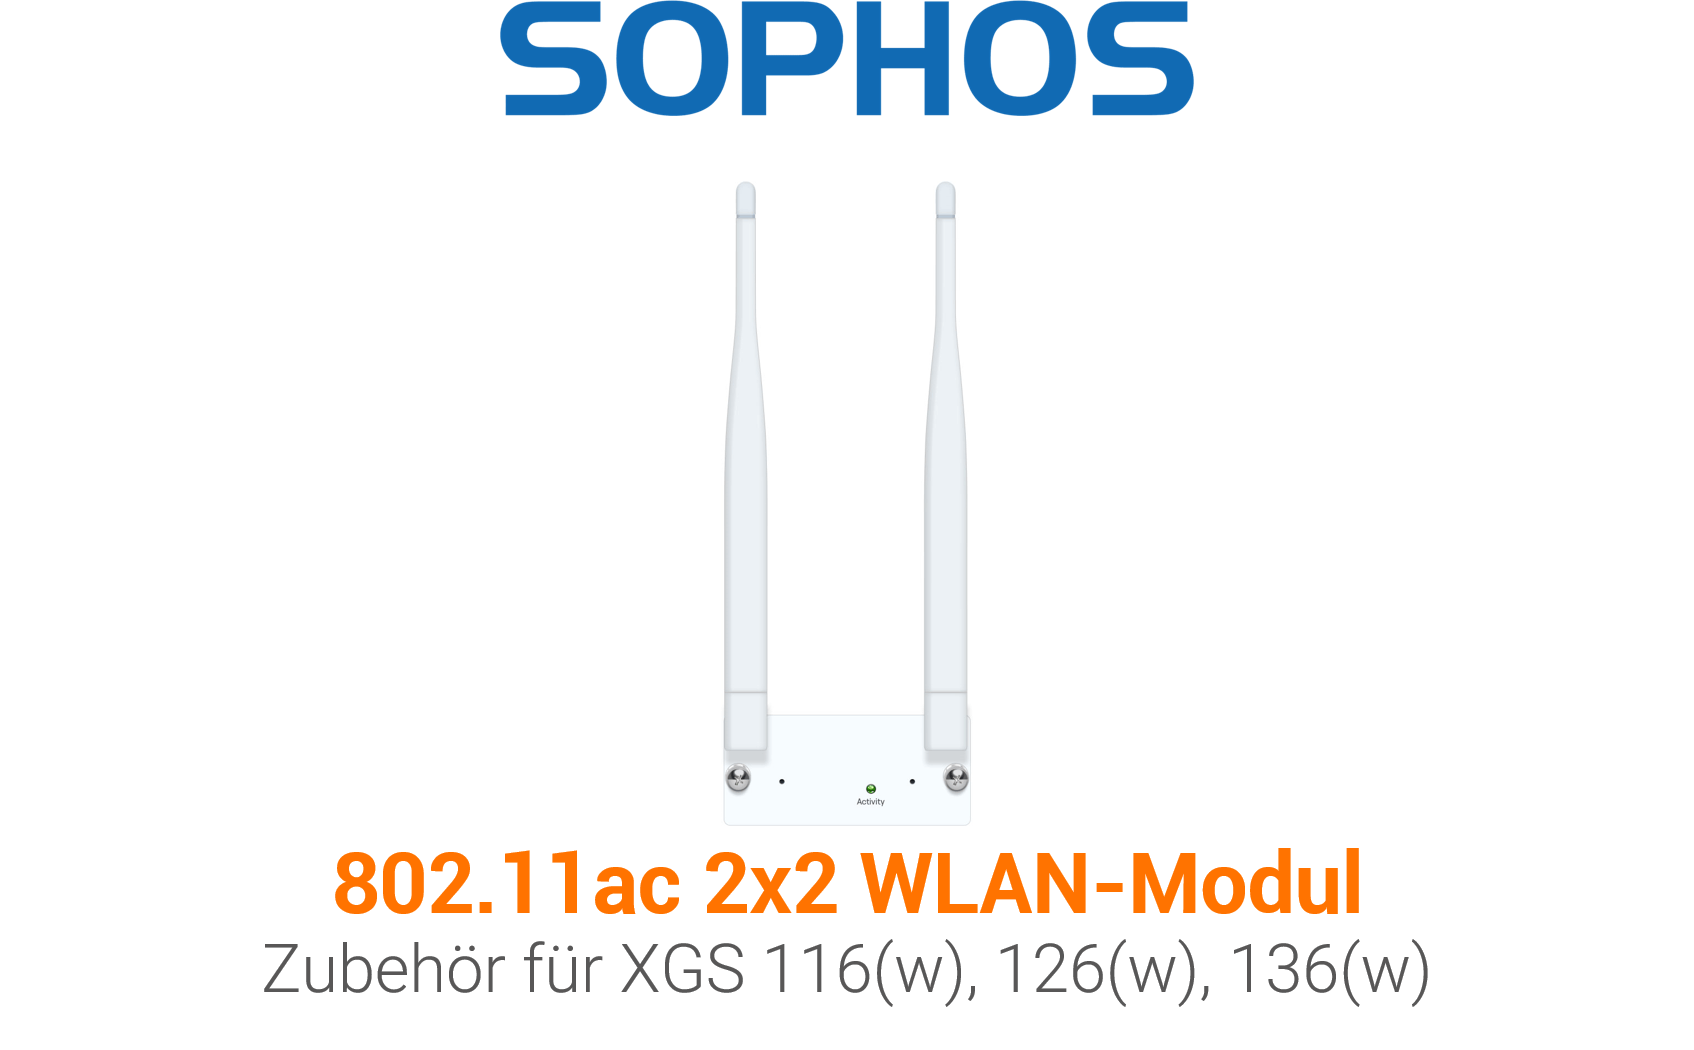 Sophos 802.11ac 2x2 WLAN Modul